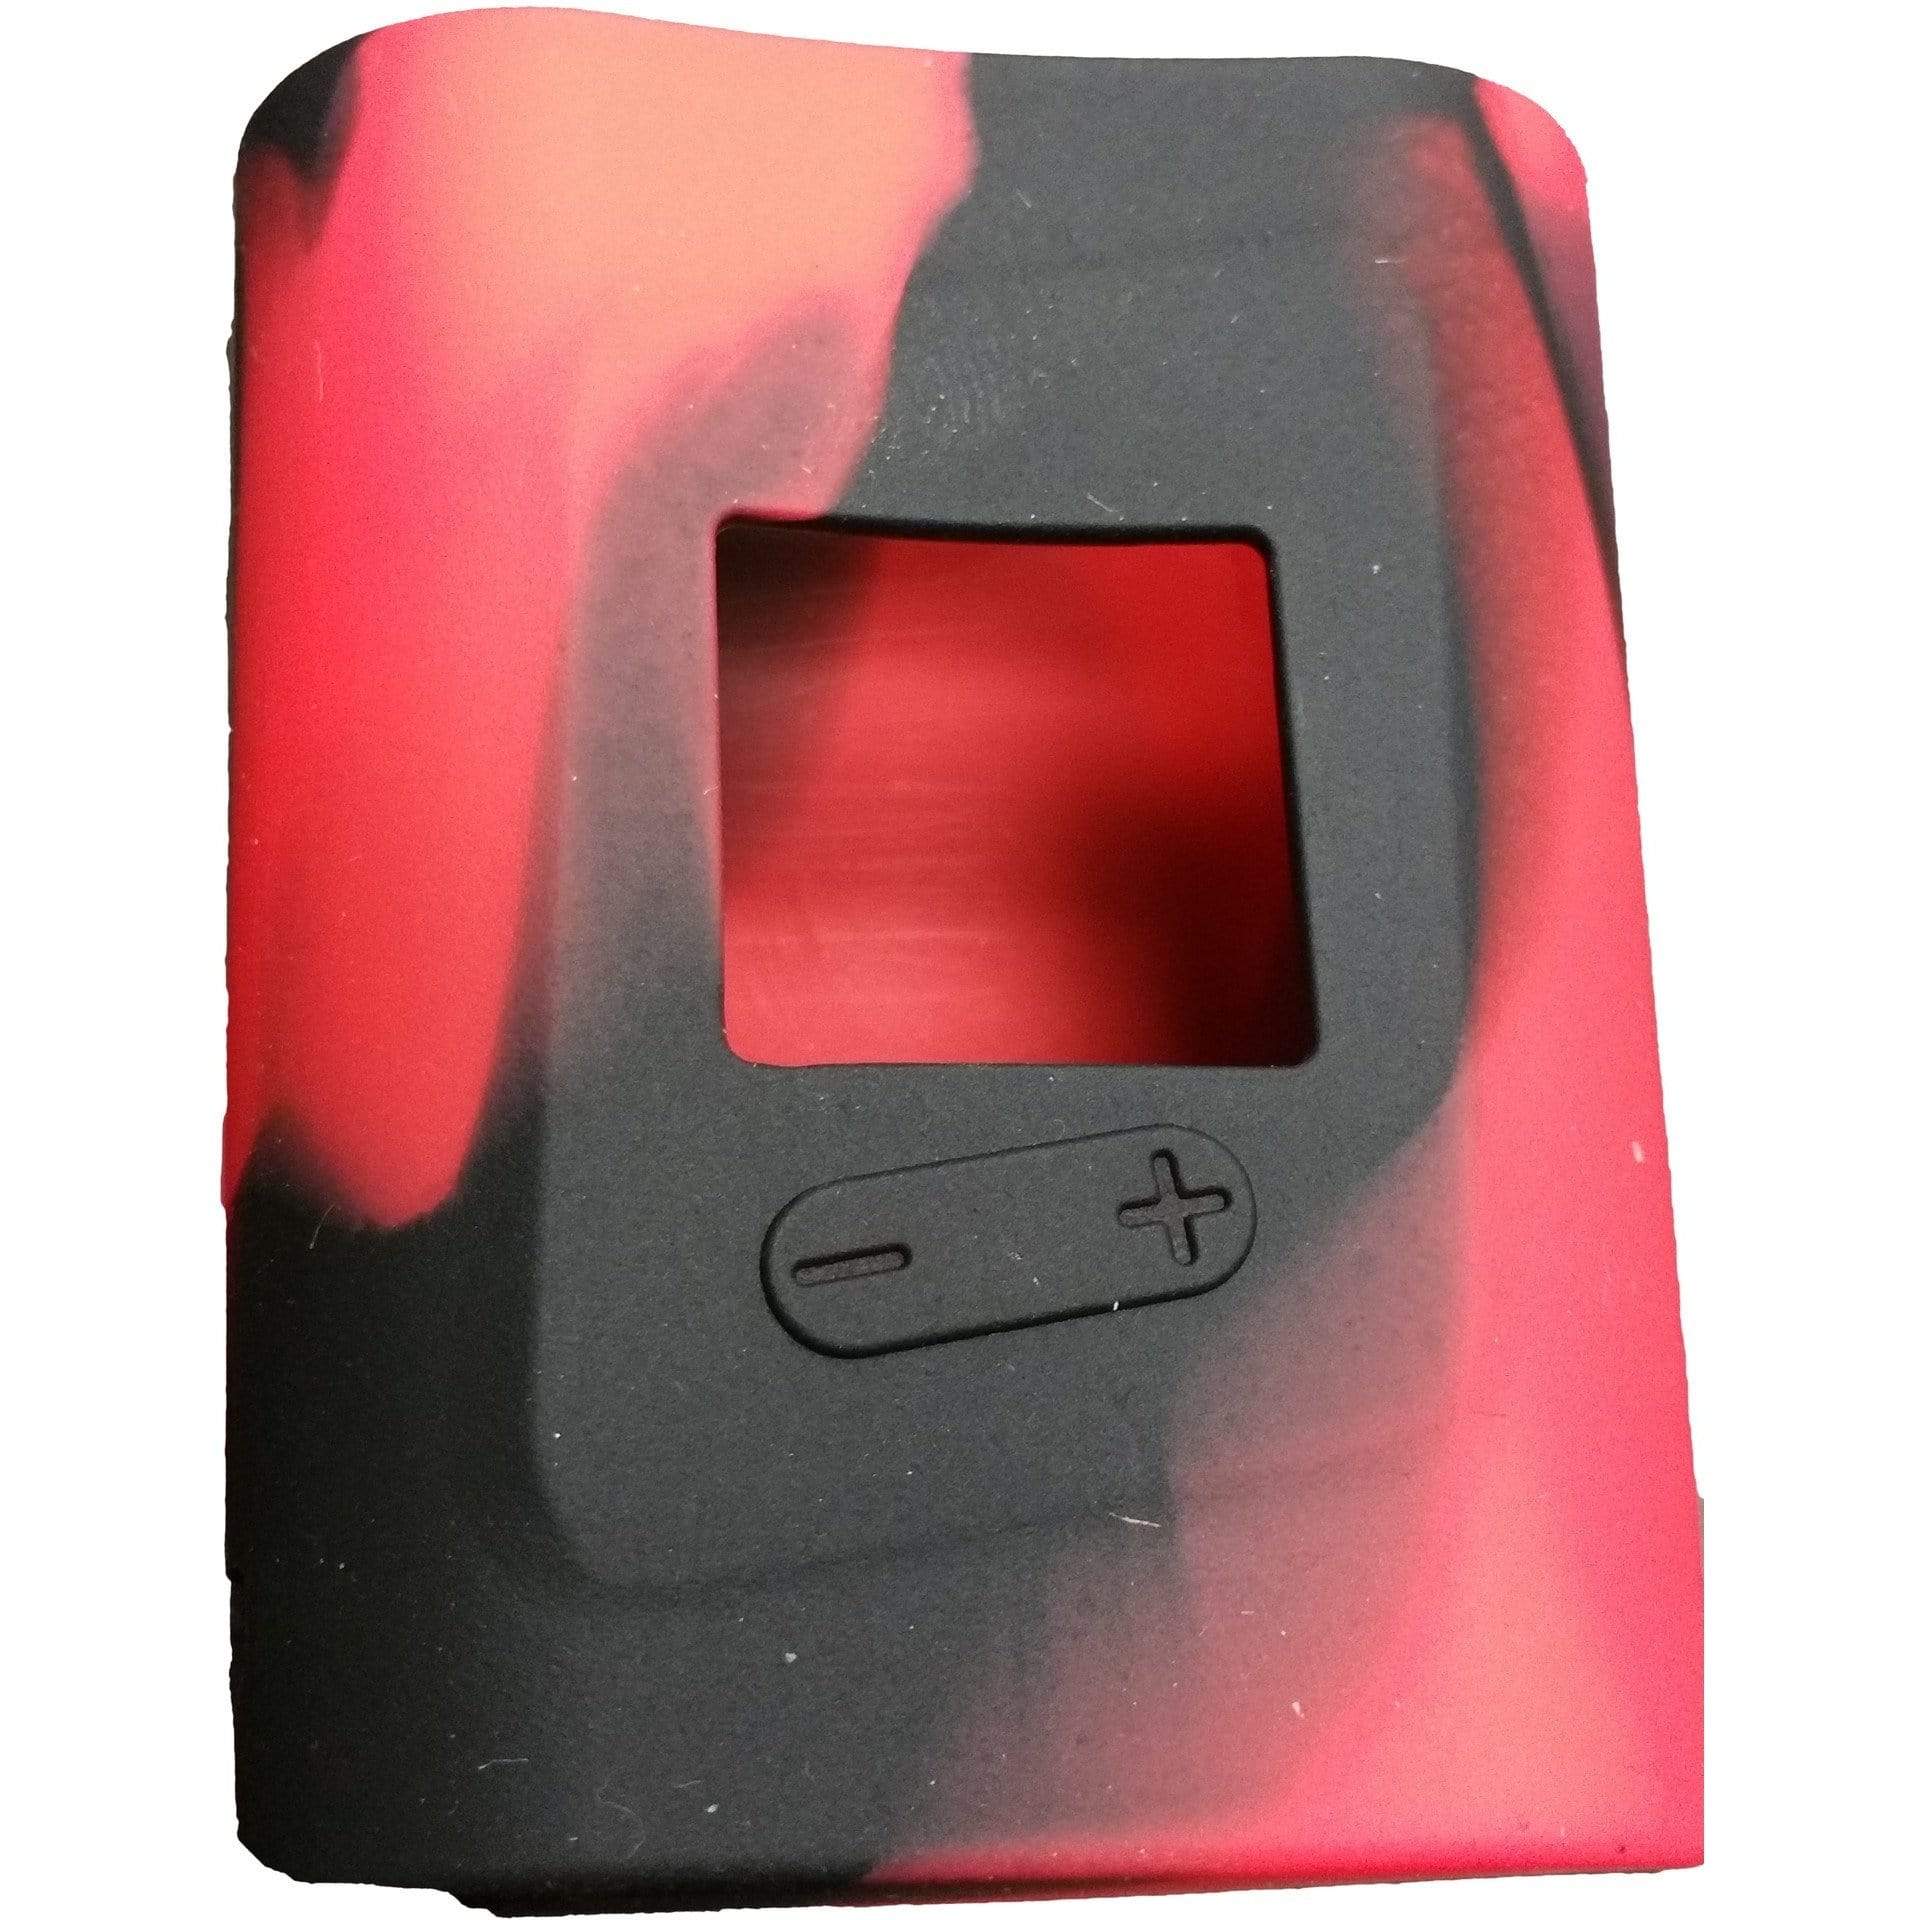 SMOK Al85 Baby Alien Mod Silicone Case Red and Black Silicone Cases